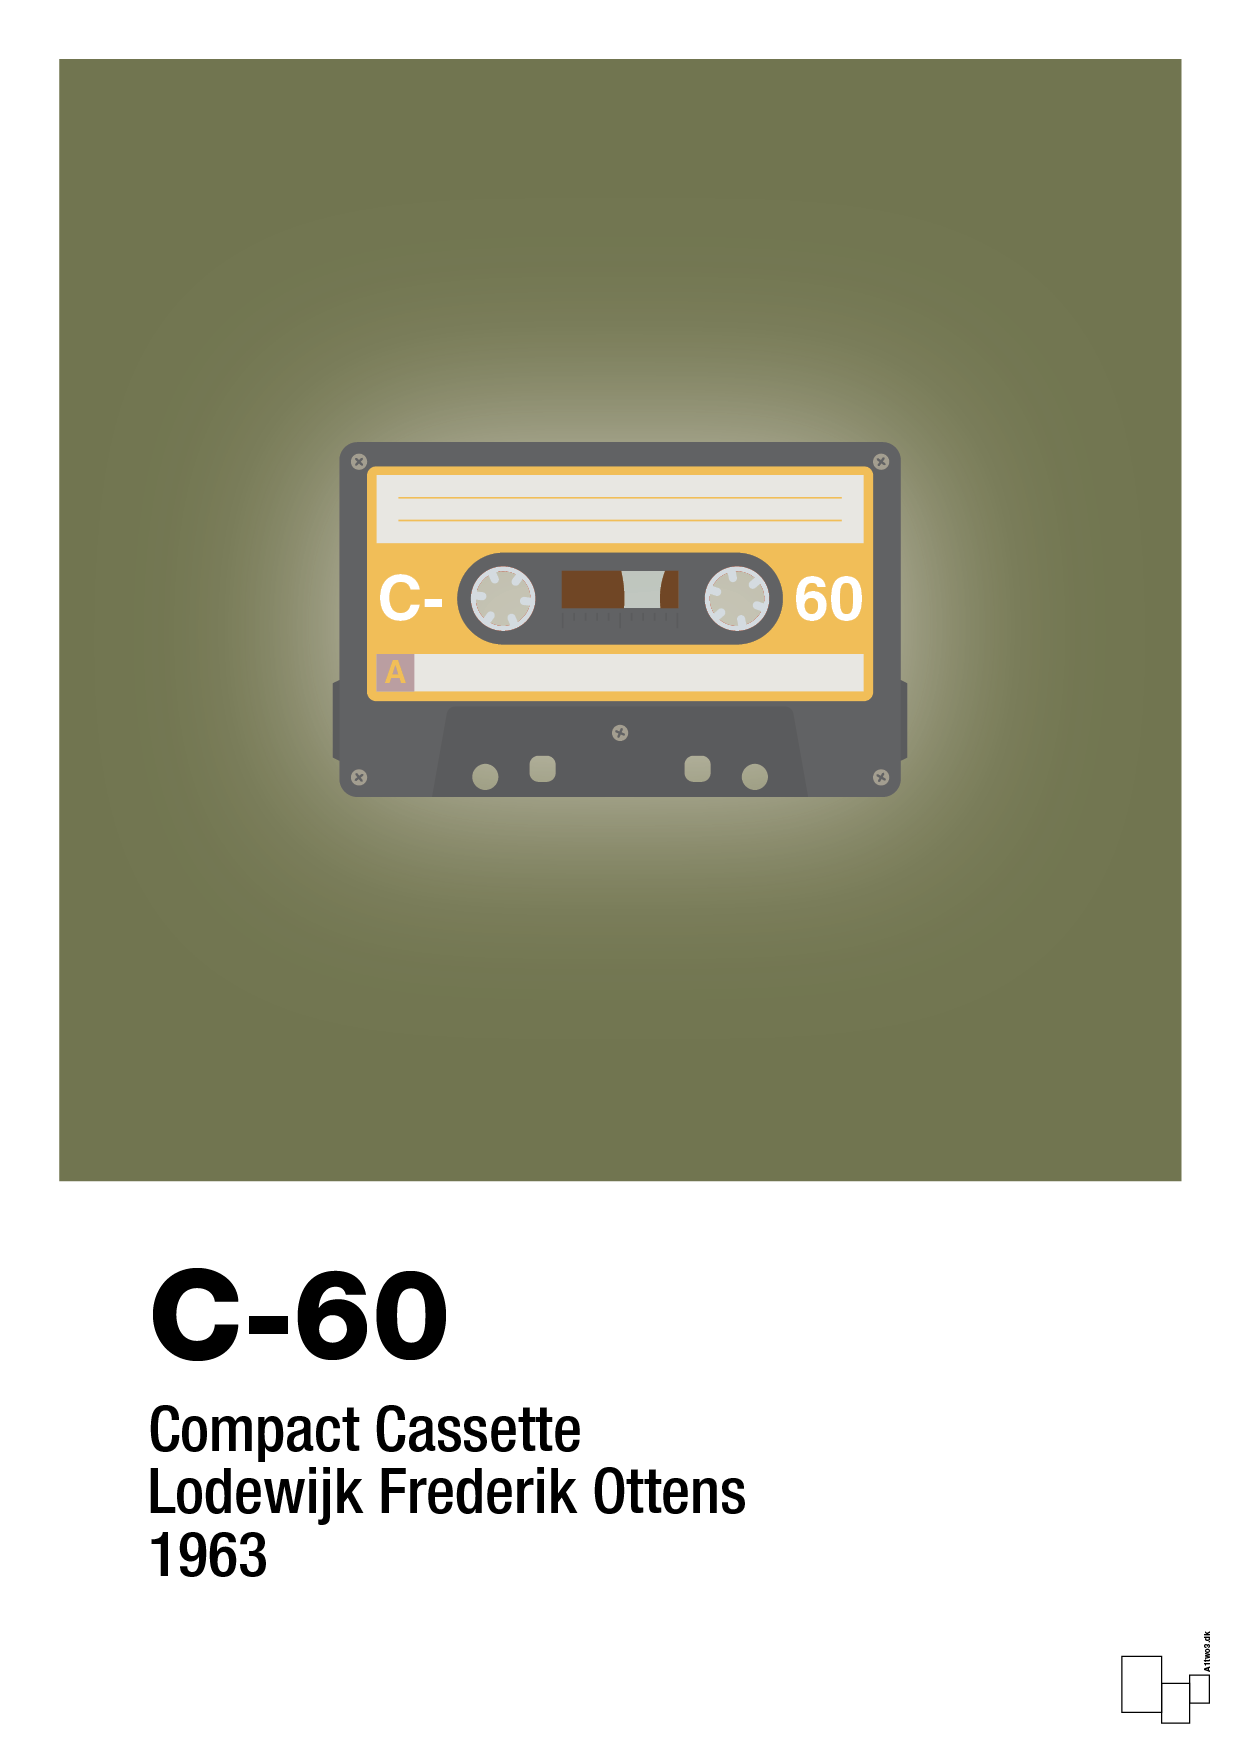 kassettebånd c-60 - Plakat med Grafik i Secret Meadow